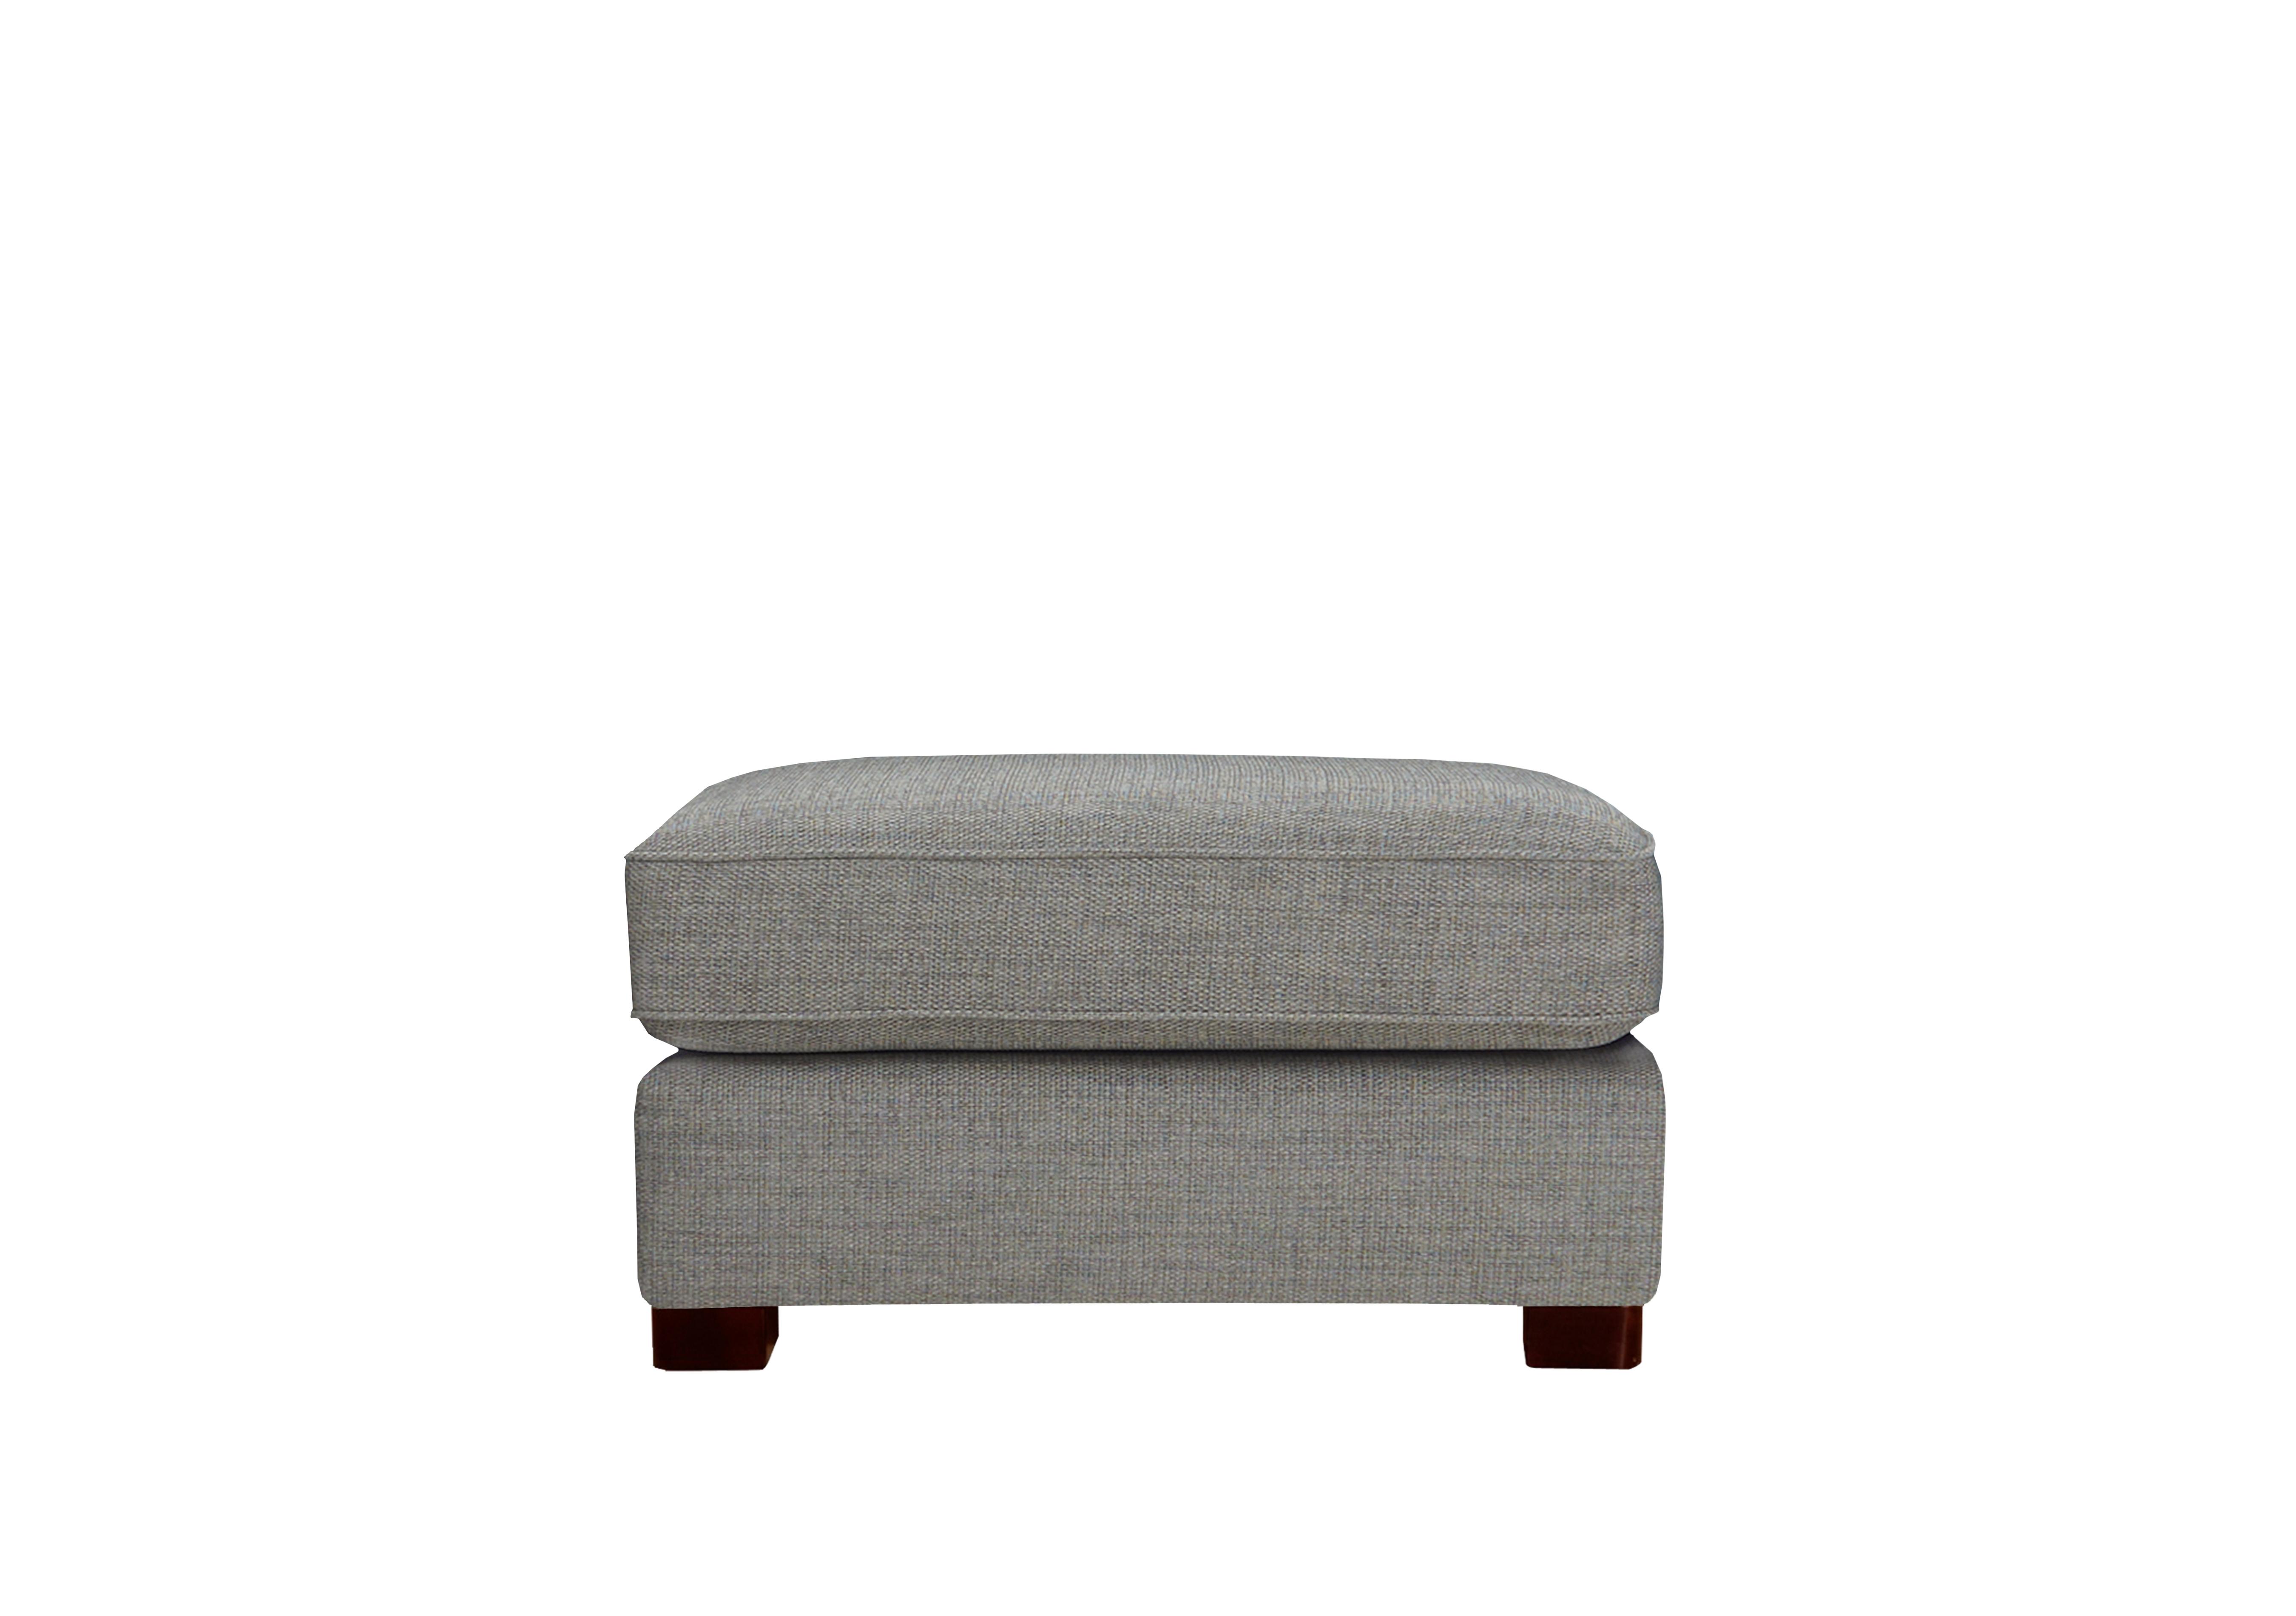 Elora Large Fabric Storage Footstool in Kento 301 Warm Grey Dbf on Furniture Village